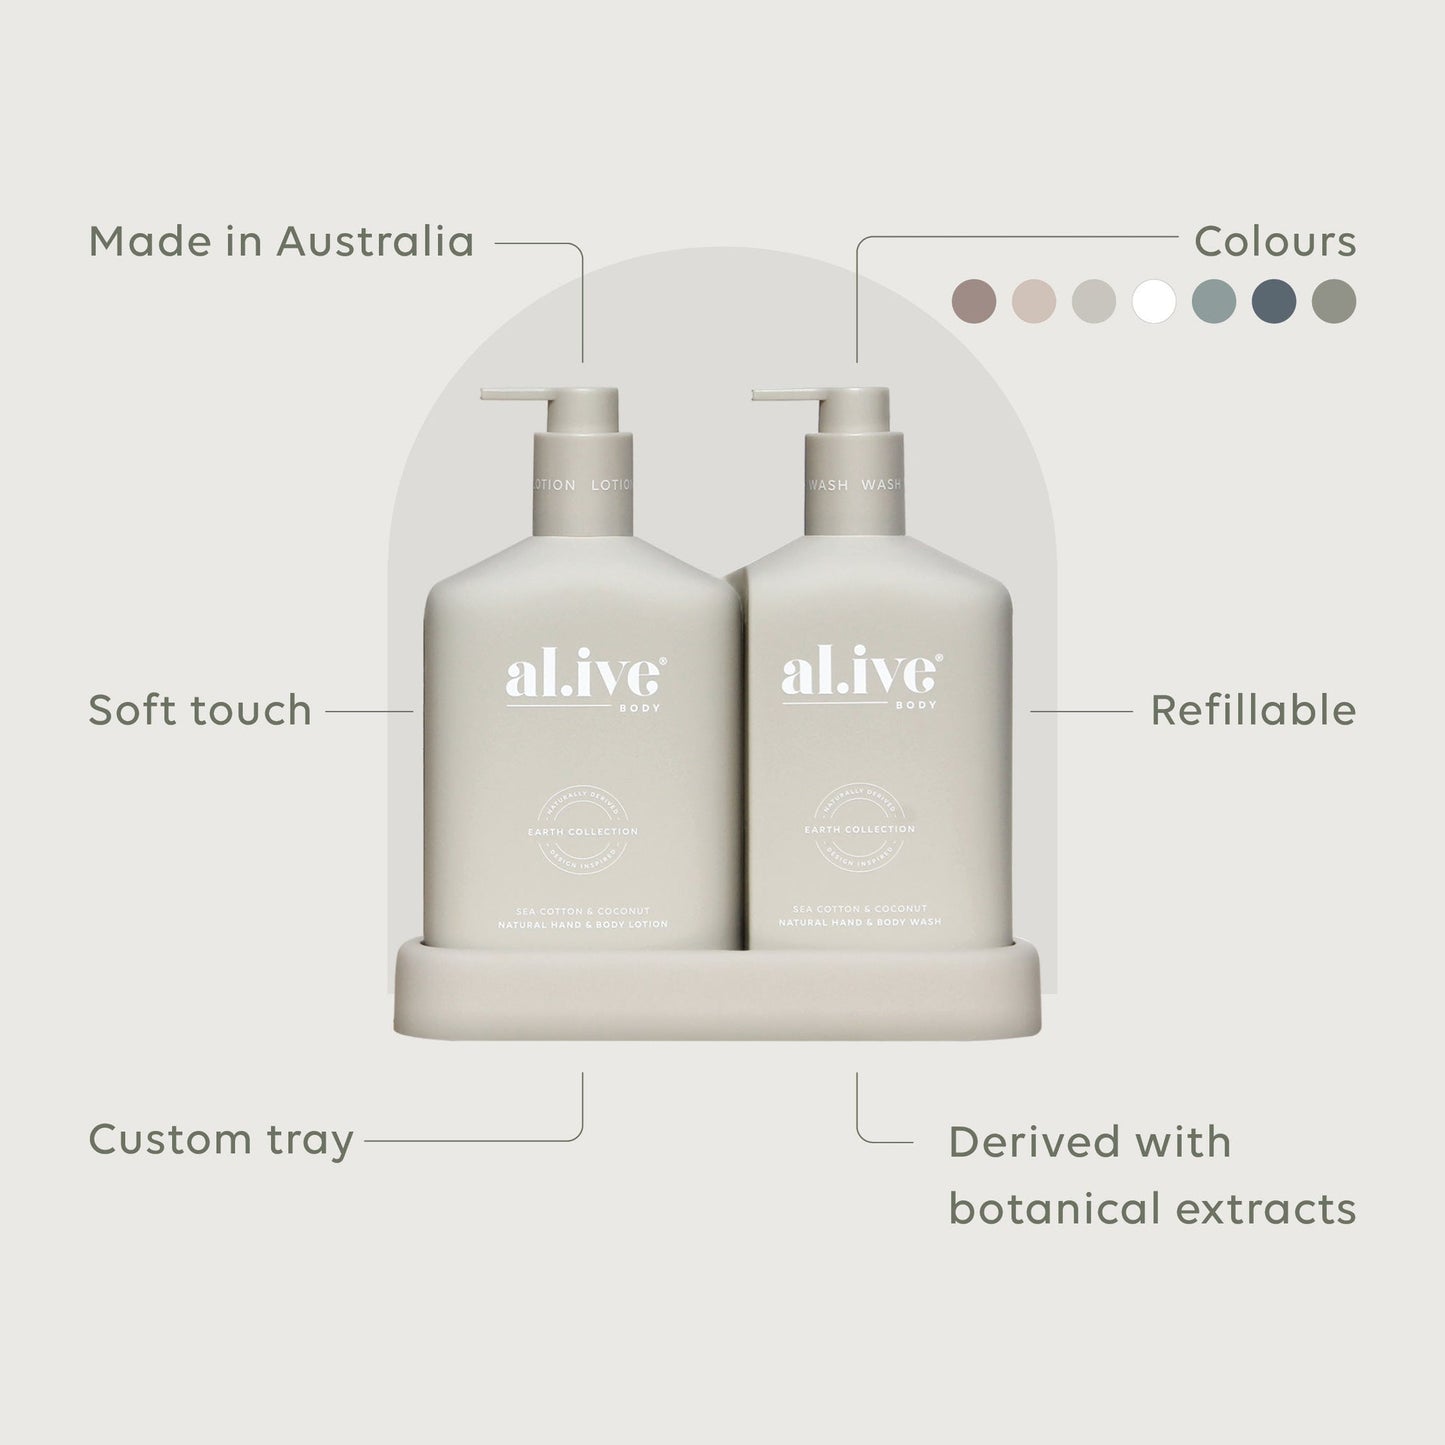 Al.ive Body - Wash & Lotion Duo - Sea Cotton & Coconut